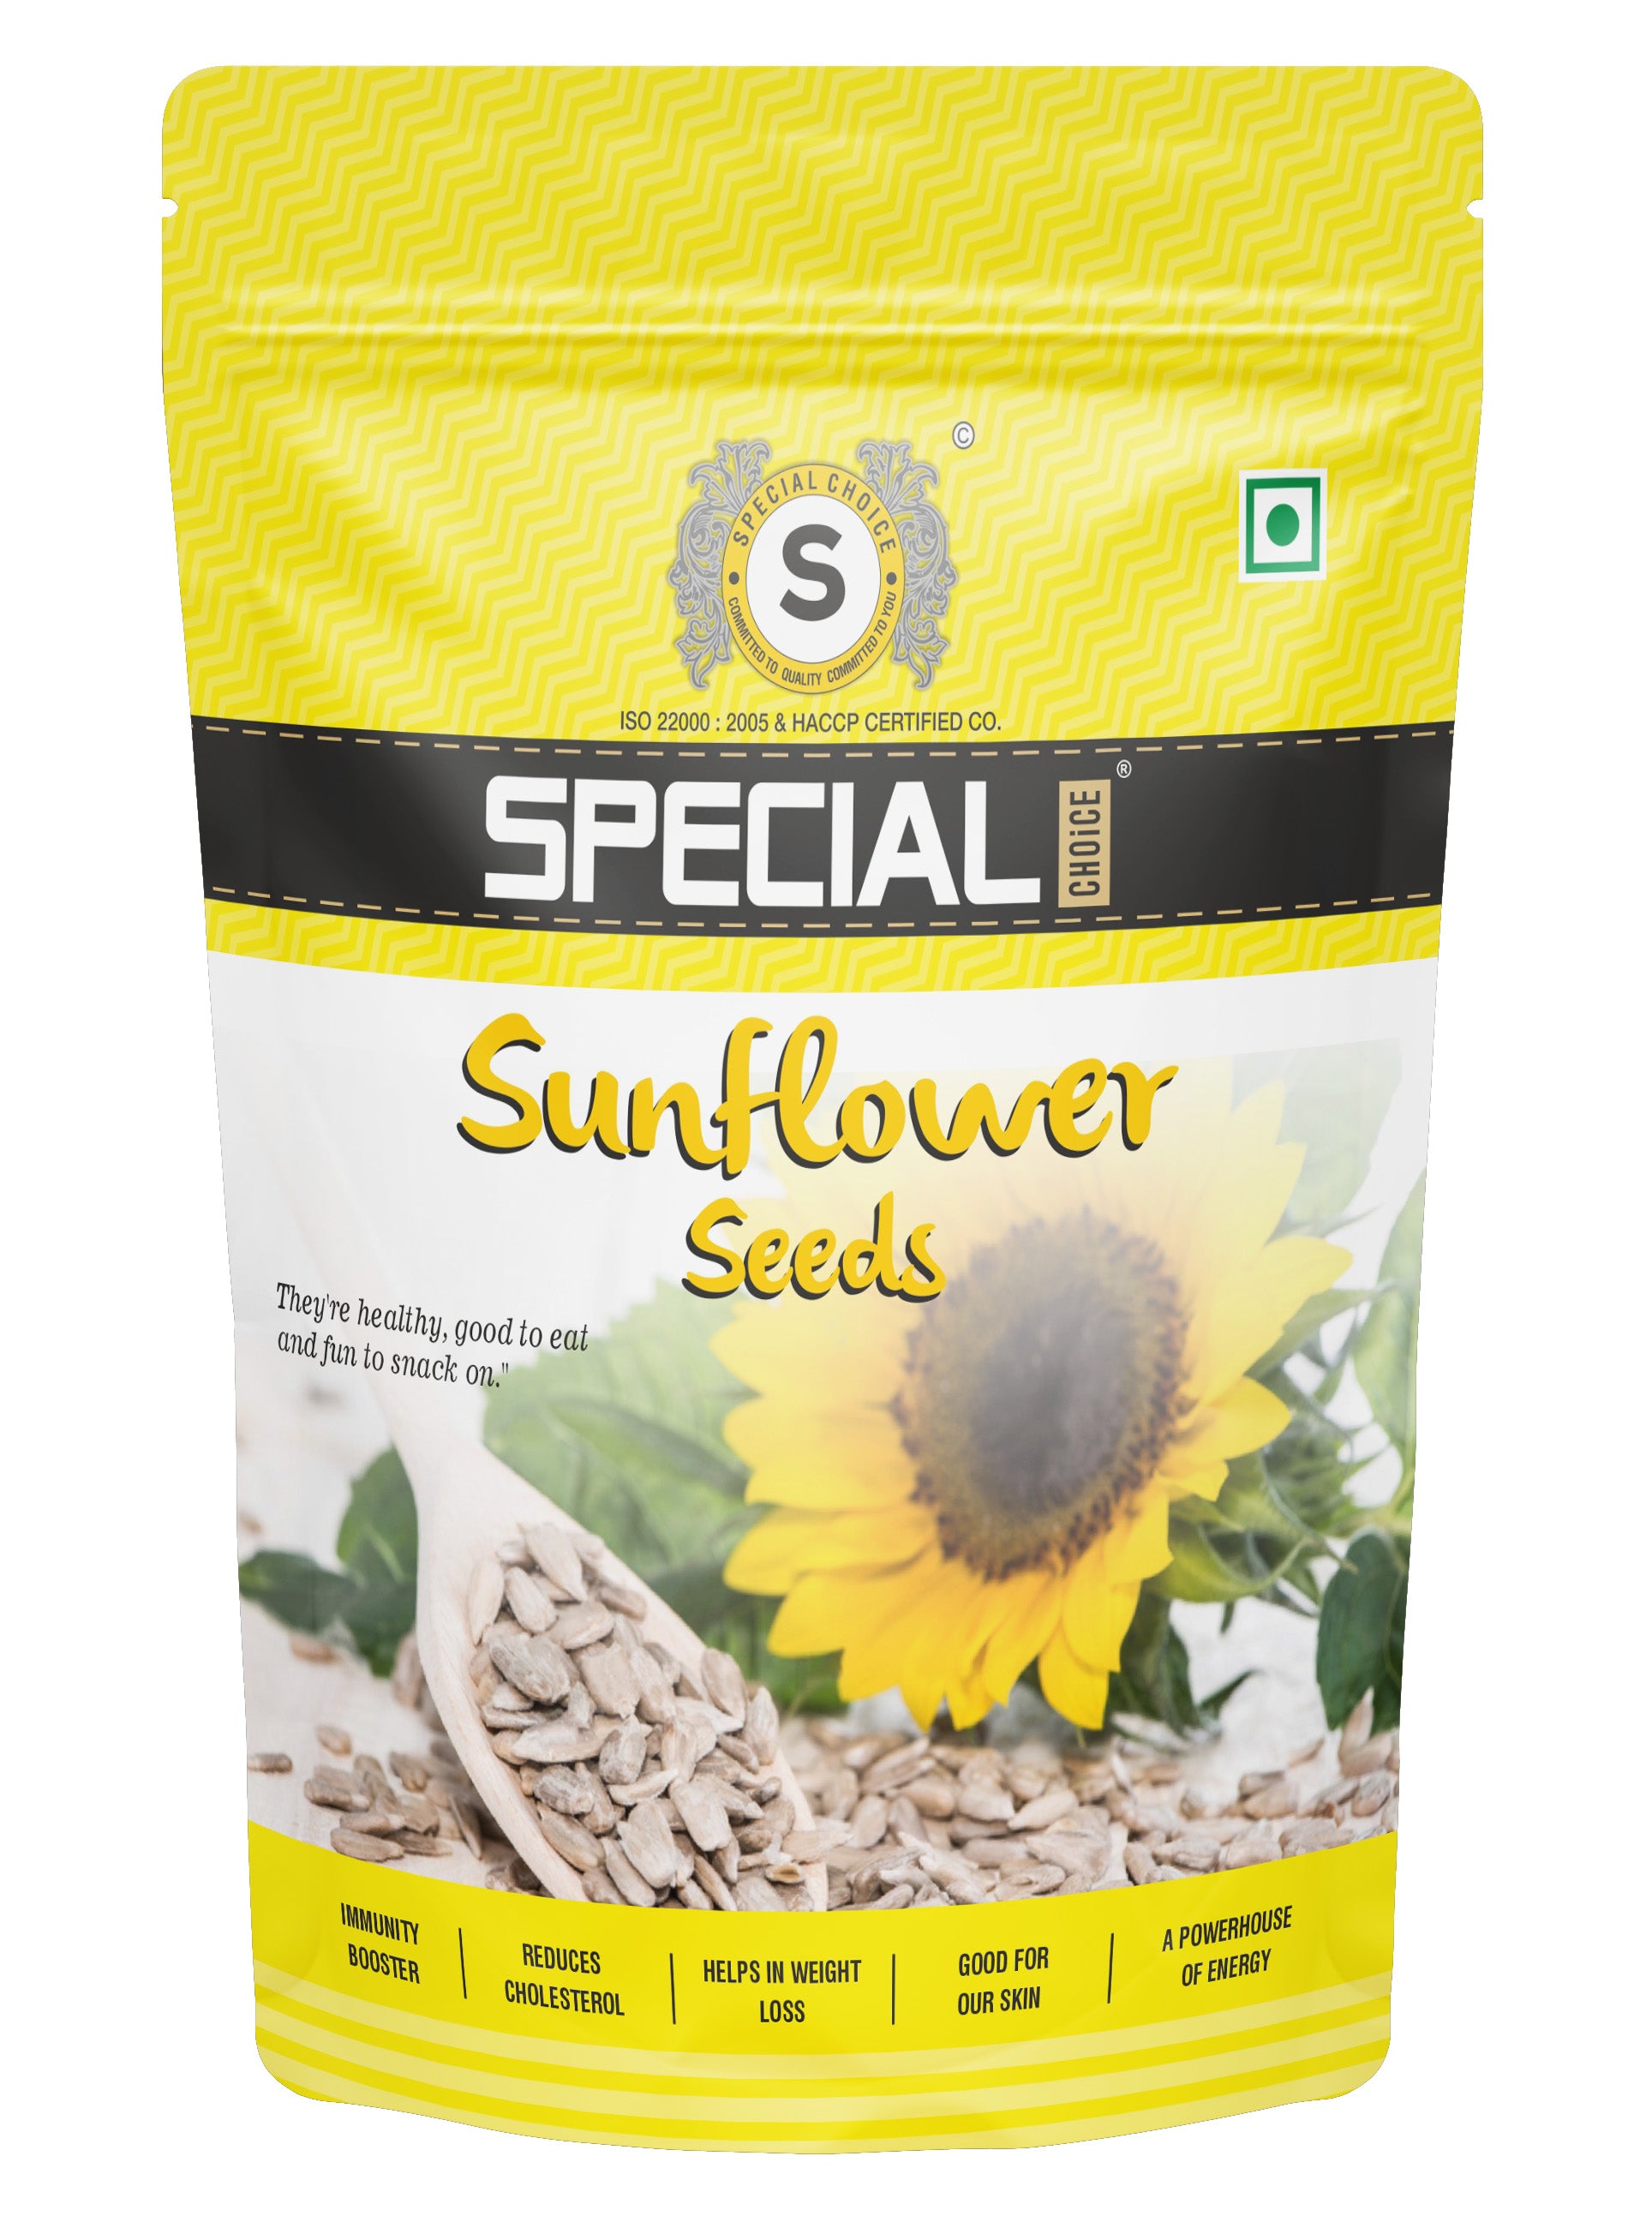 Immune-boosting sunflower seeds